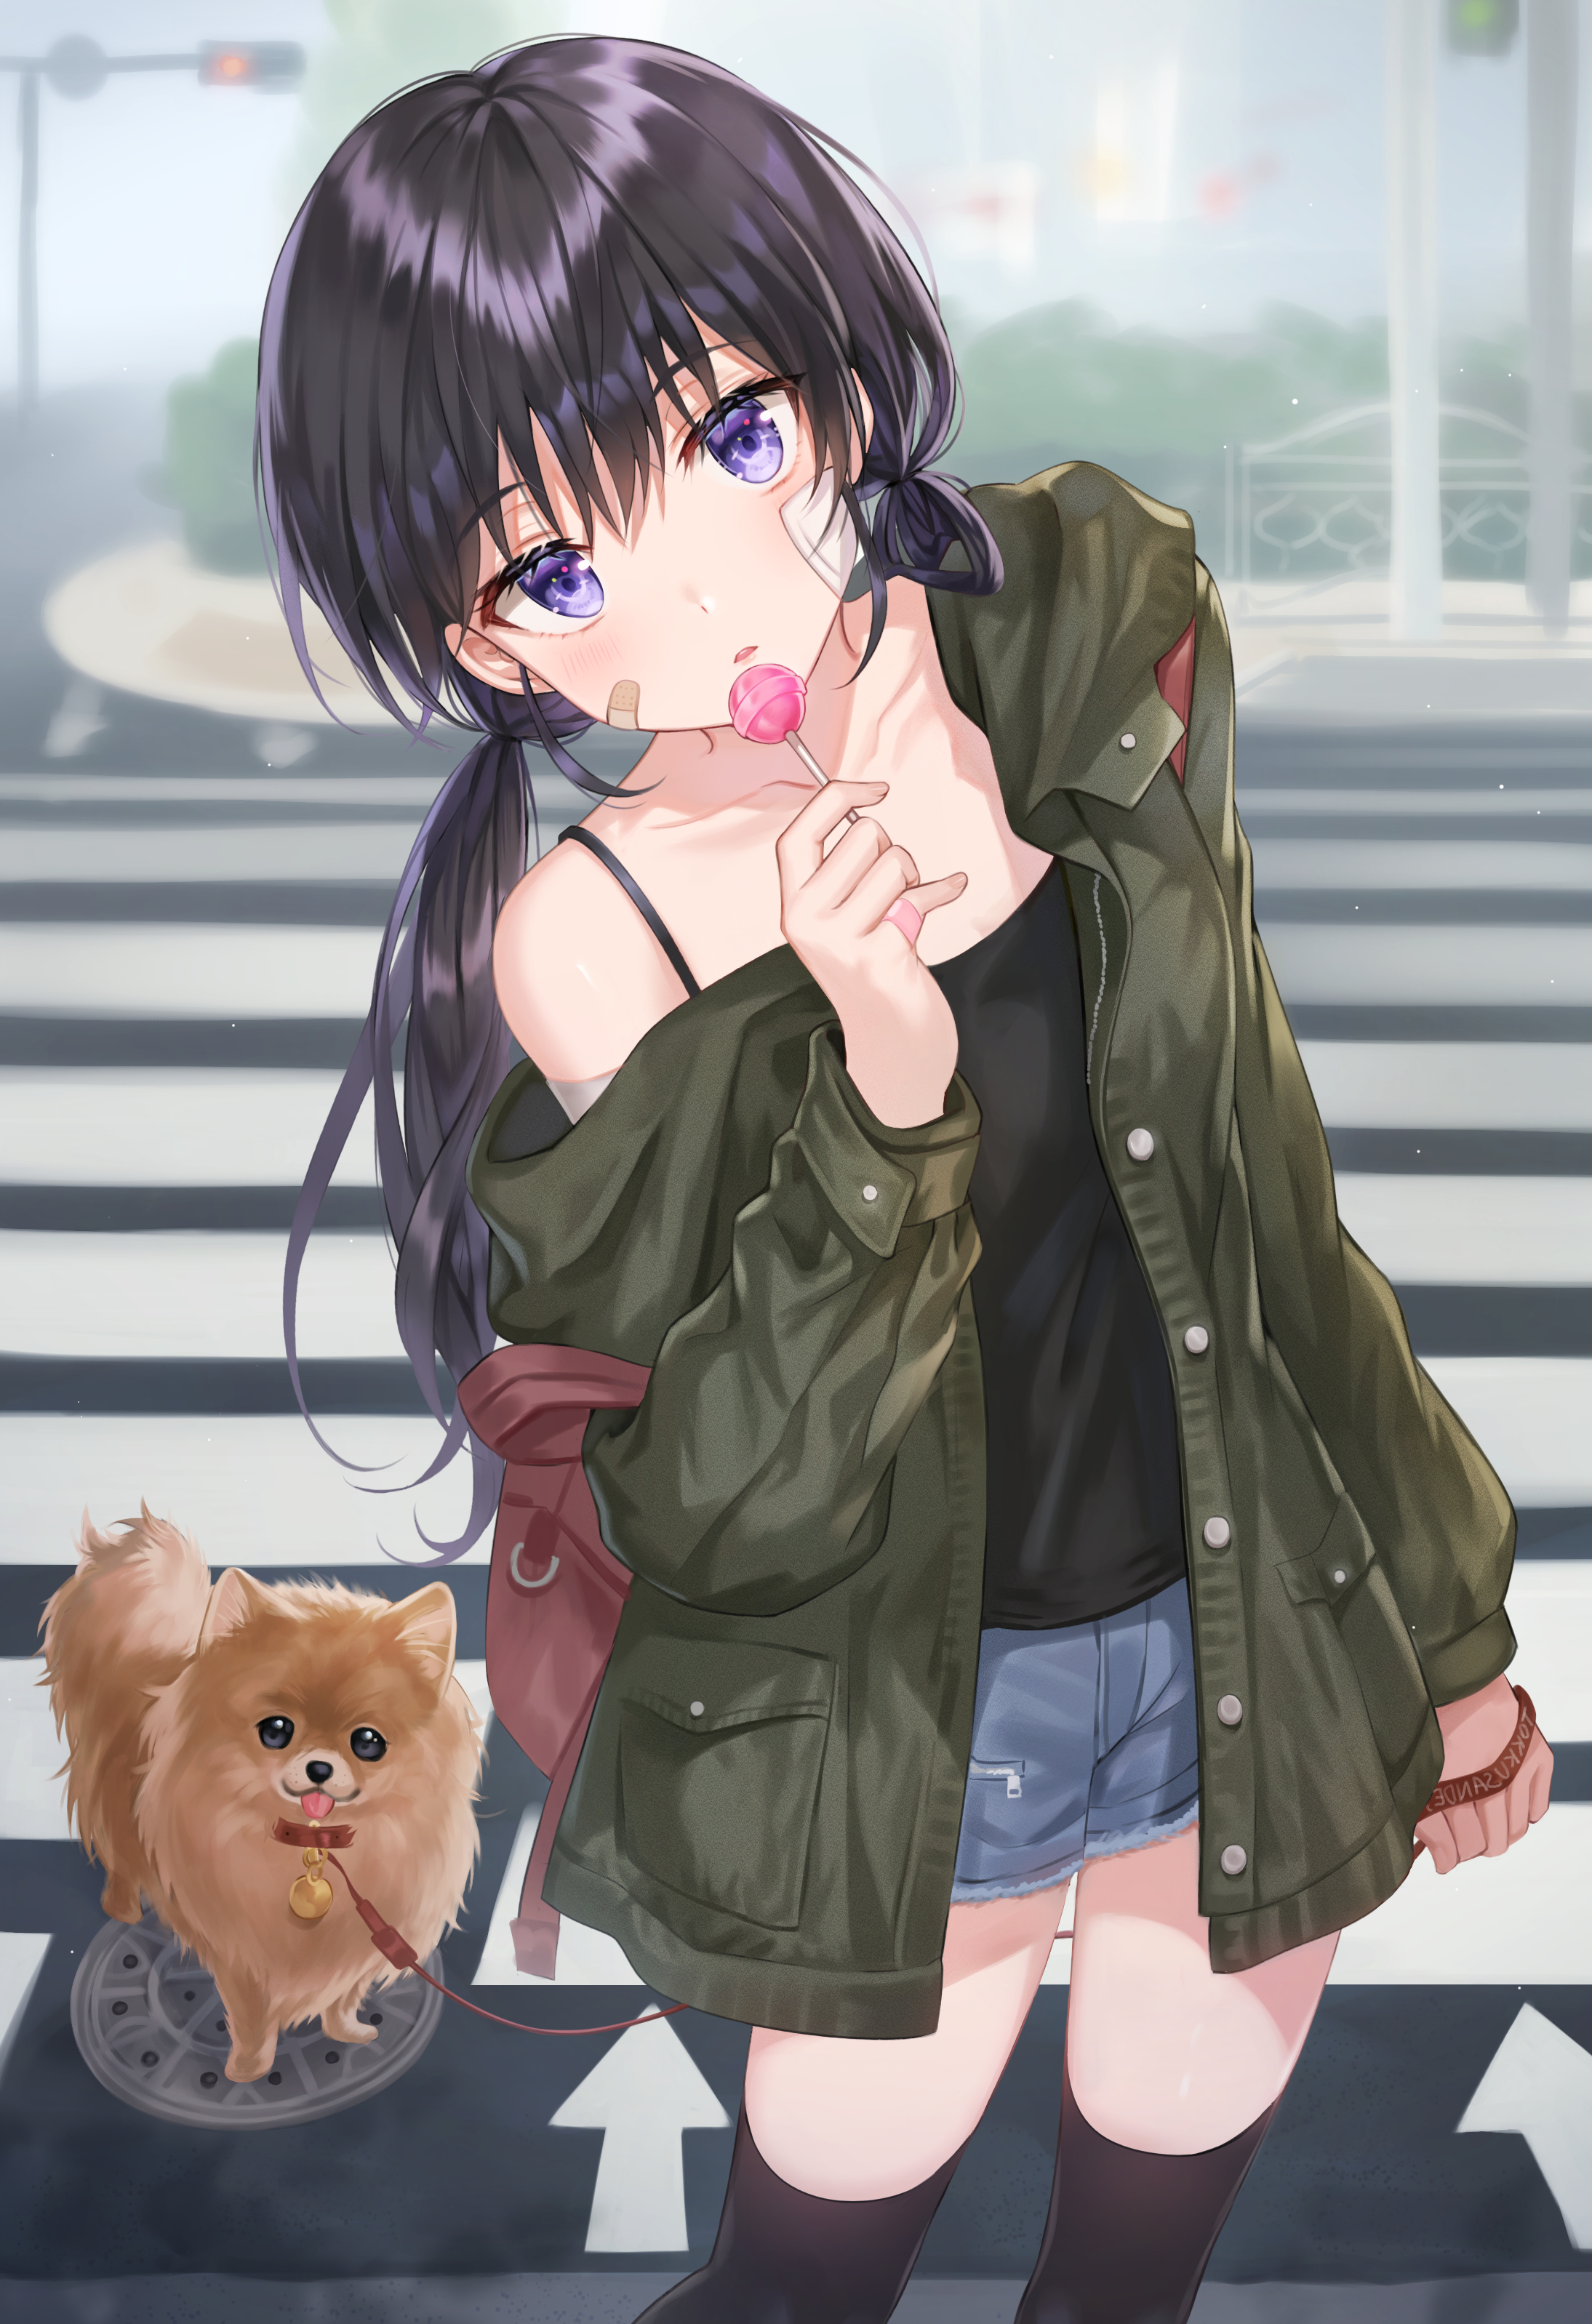 Anime 2189x3196 anime anime girls digital art artwork portrait display 2D lollipop dog Tokkyu (artista) purple eyes dark hair twintails thigh-highs open jacket short shorts